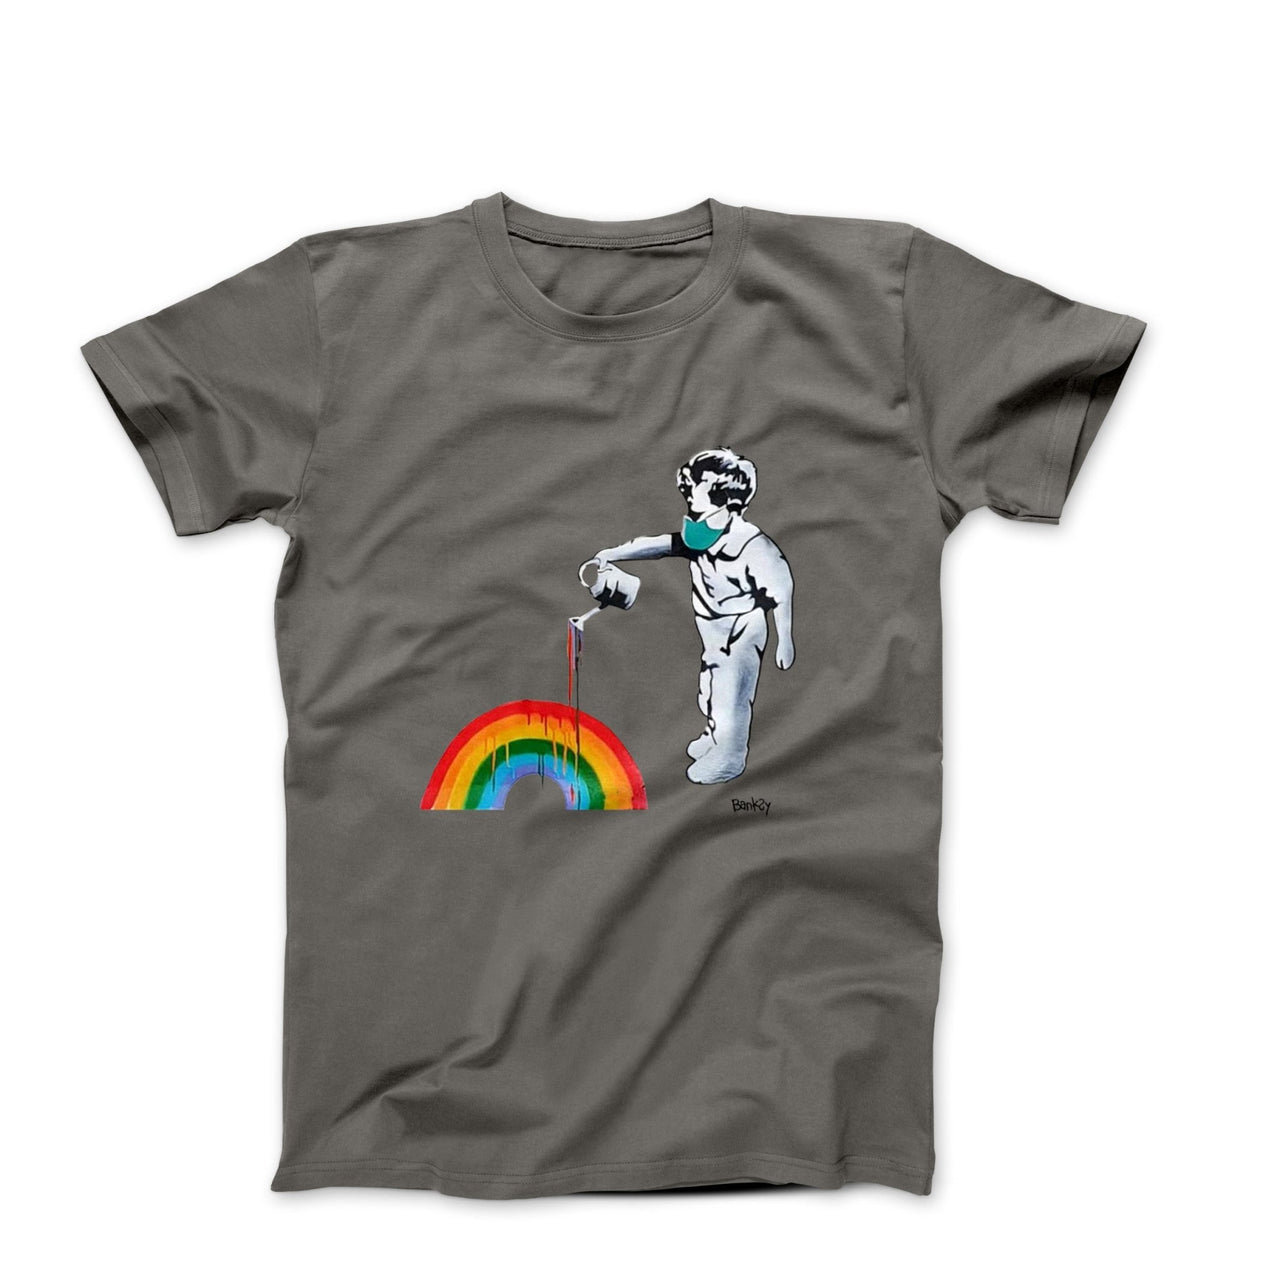 Banksy Rainbow Boy (2014) Graffiti Art T-shirt - Clothing - Harvey Ltd